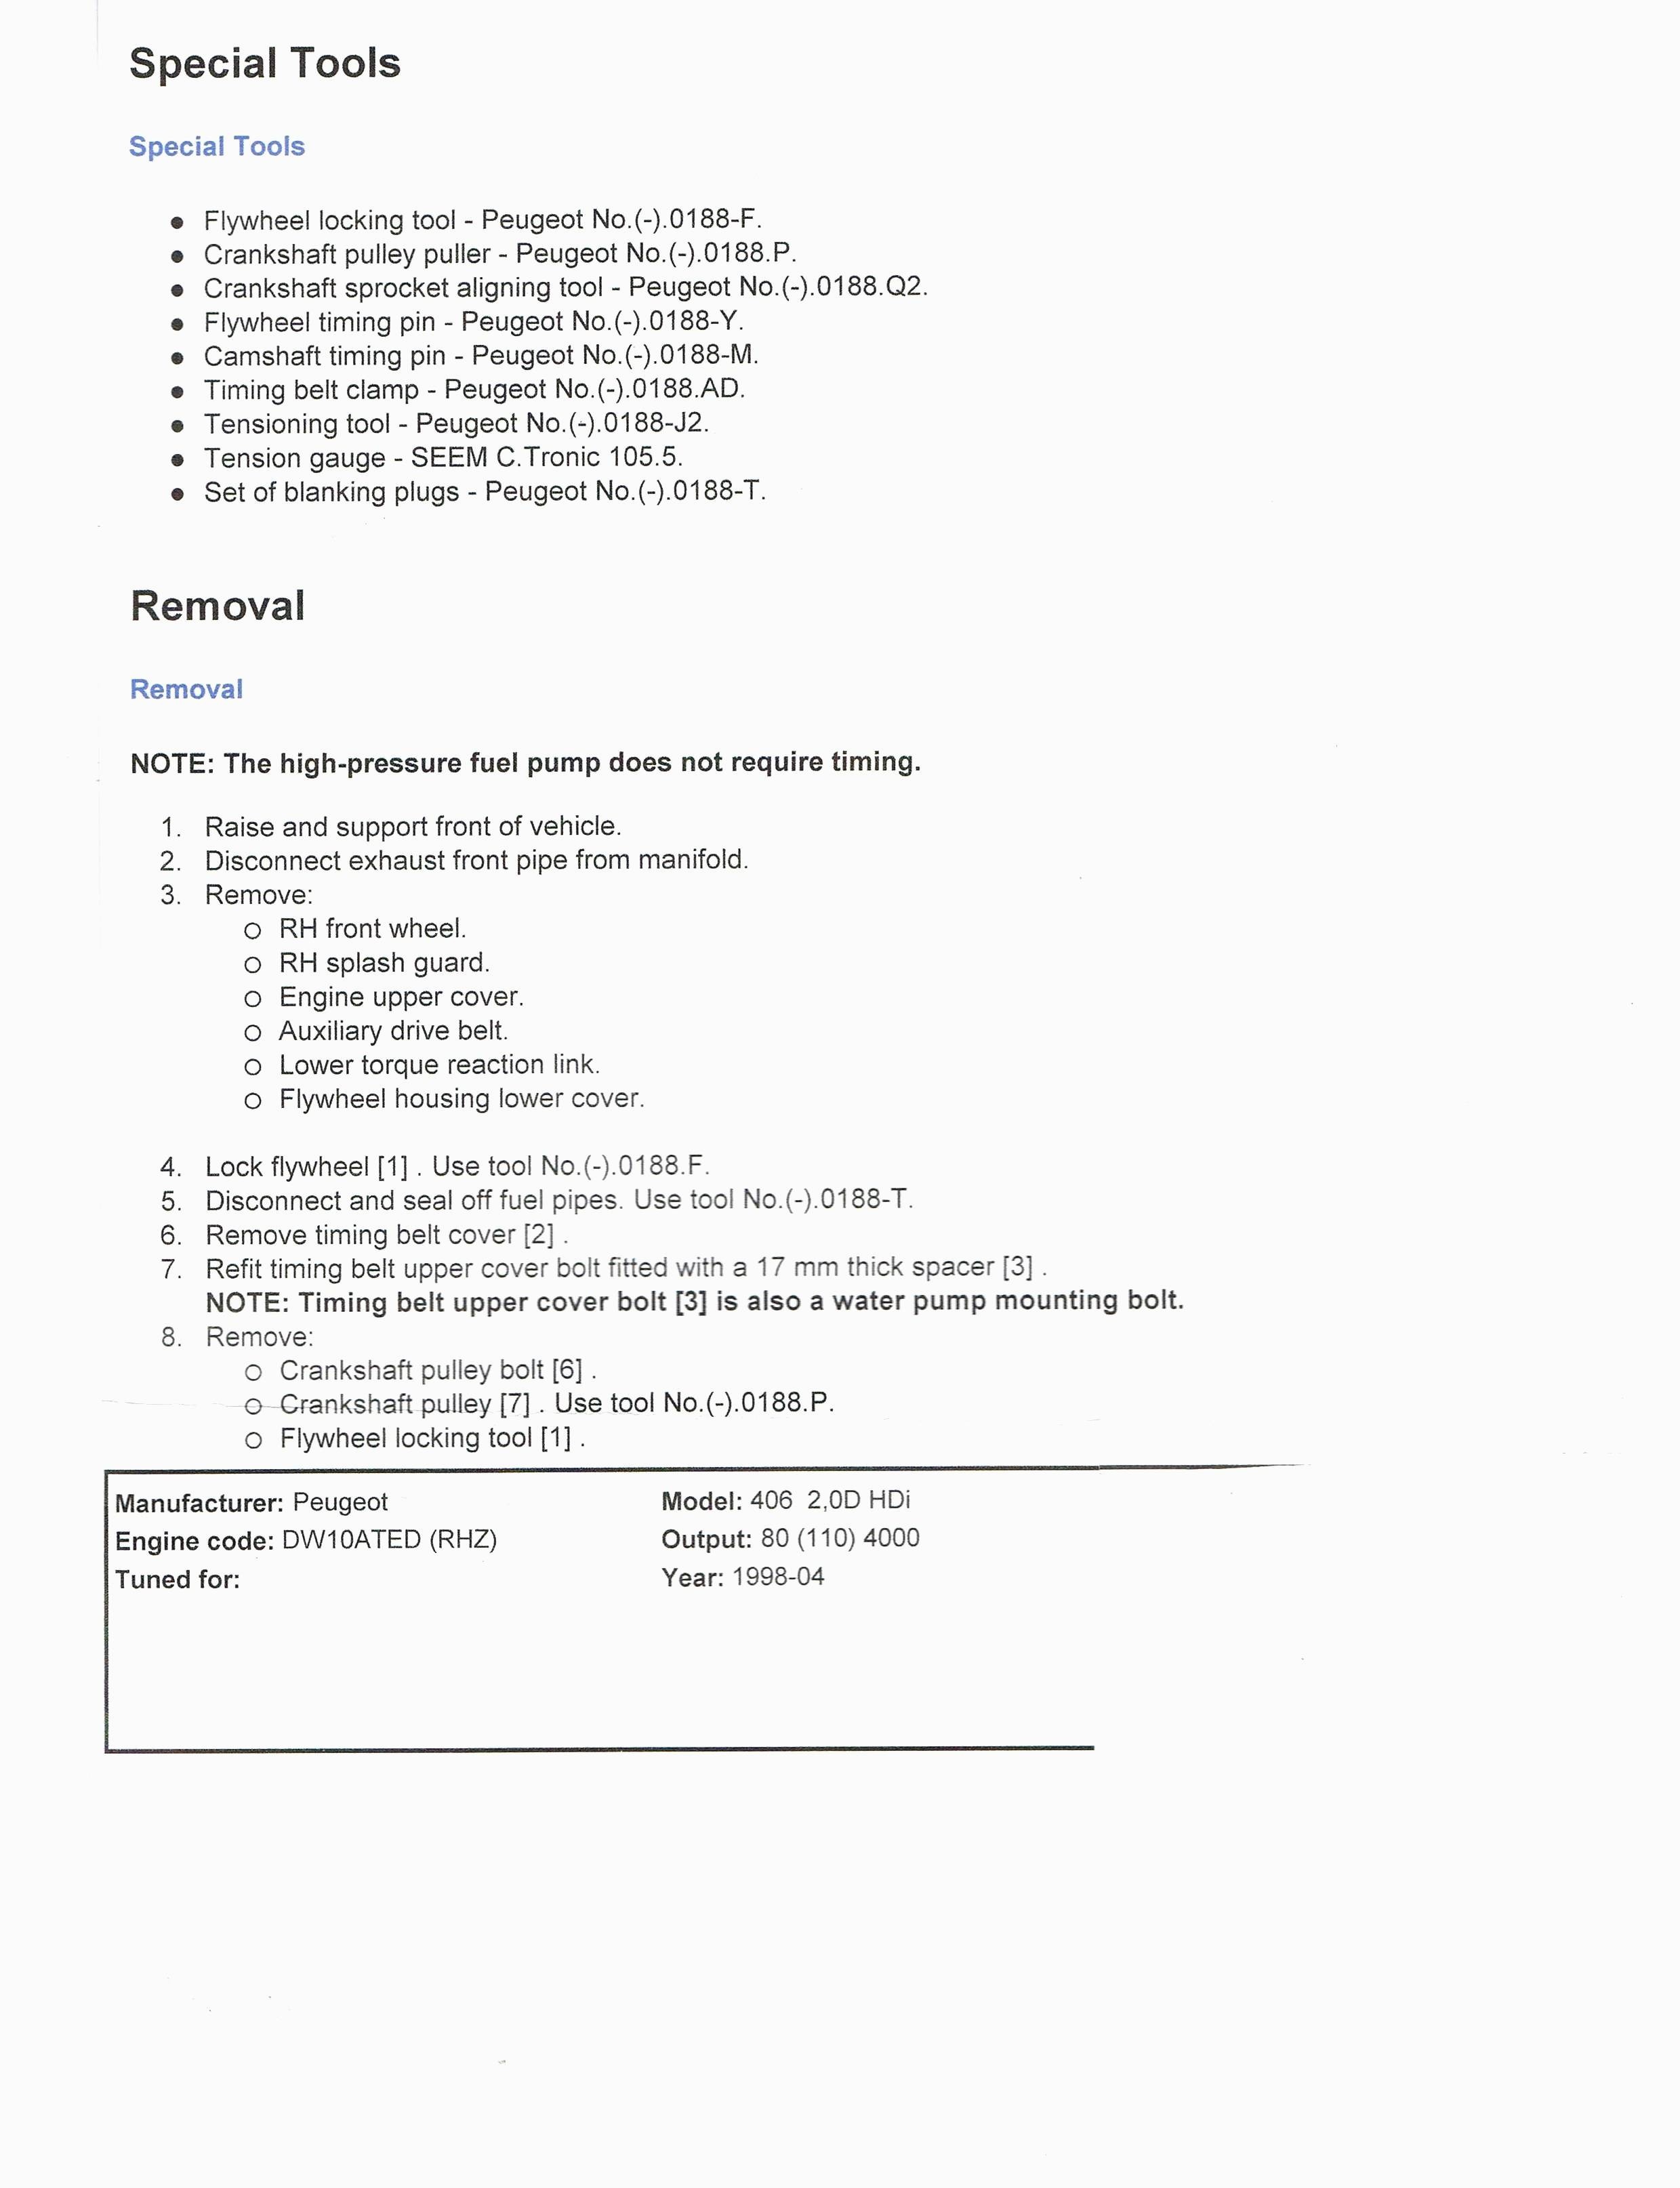 Microsoft Word 2003 Resume Templates New Newsletter Template Microsoft Word 2003 Valid Free Resume